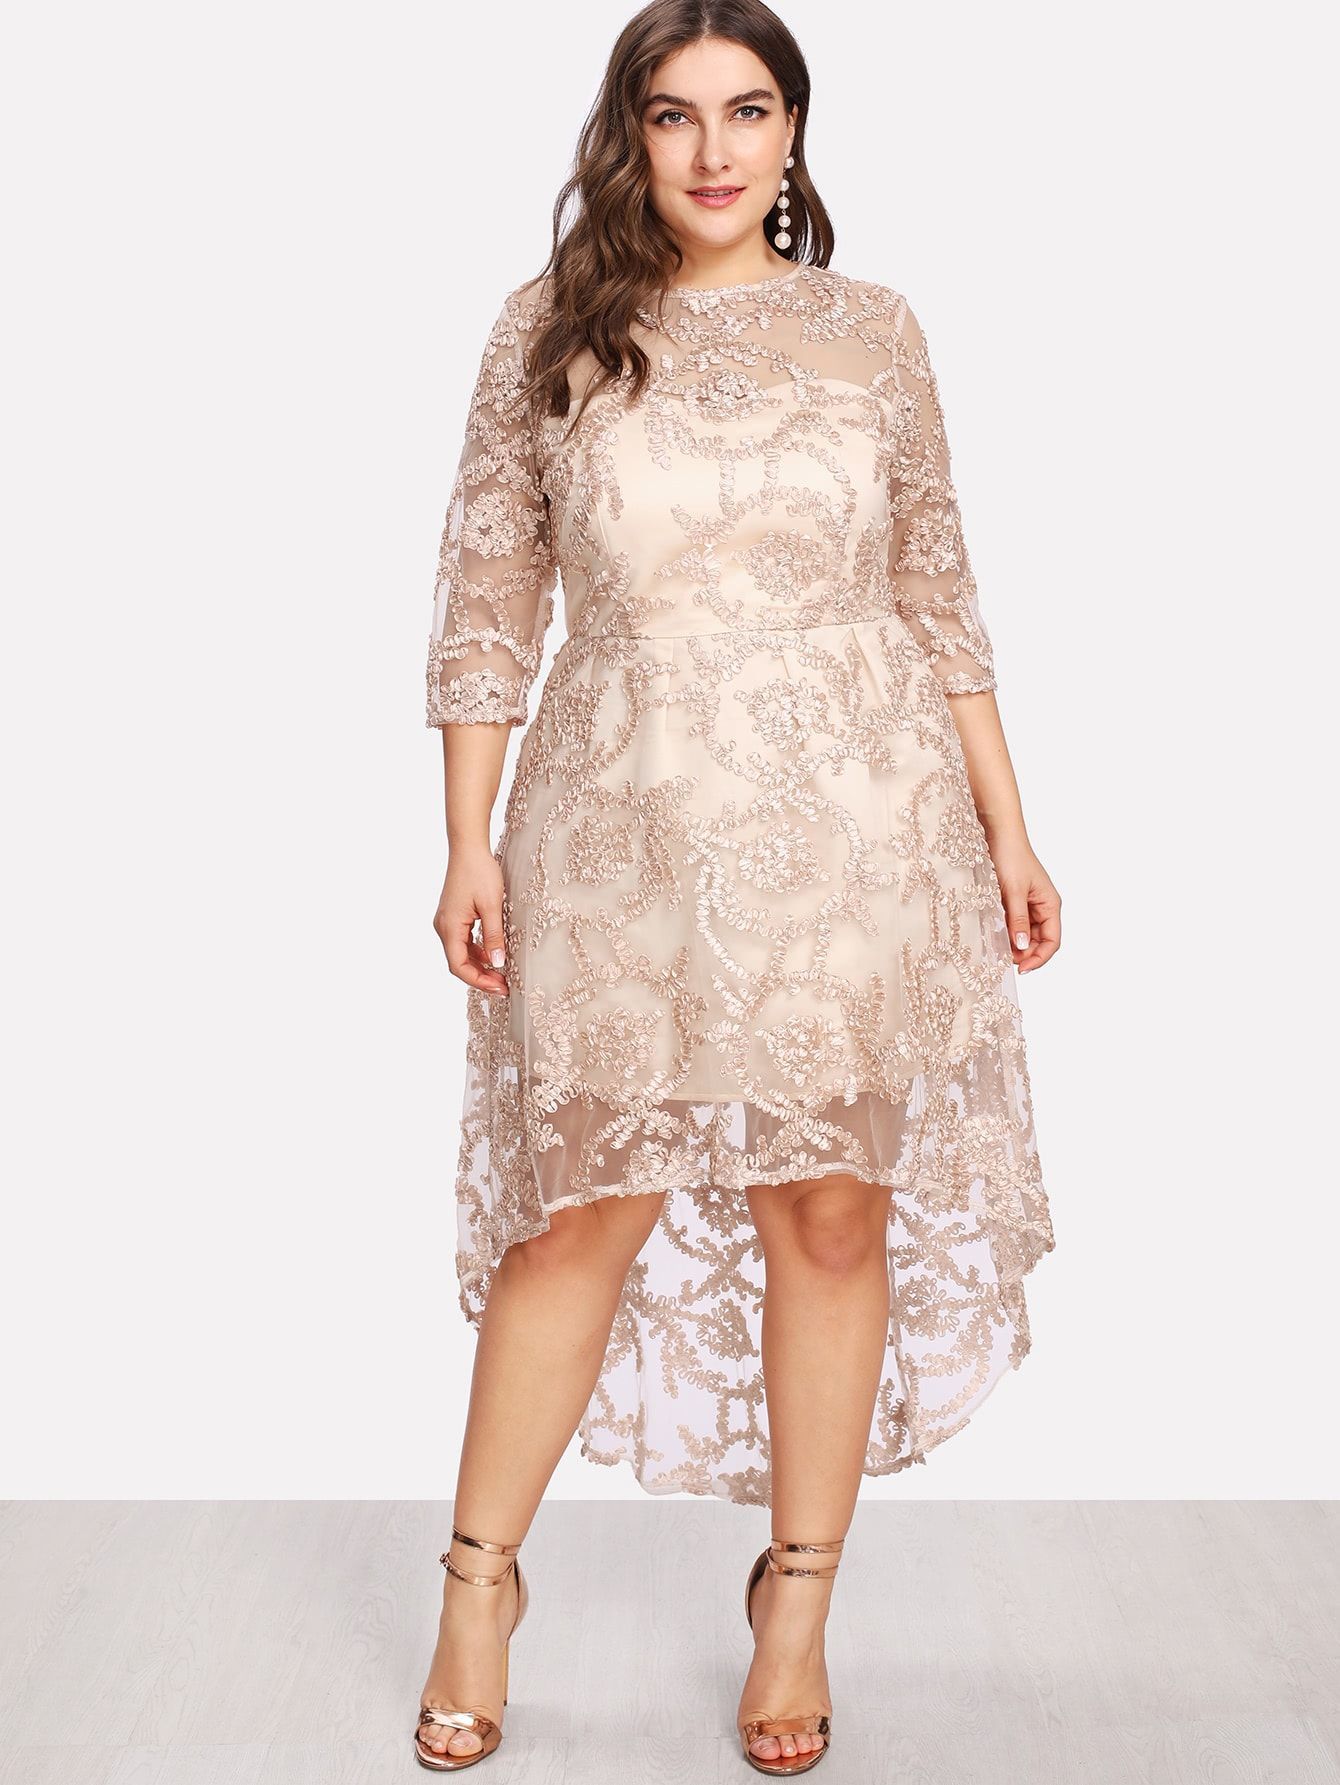 9 Brocade Dress Designs to Make Fat People Look Slim